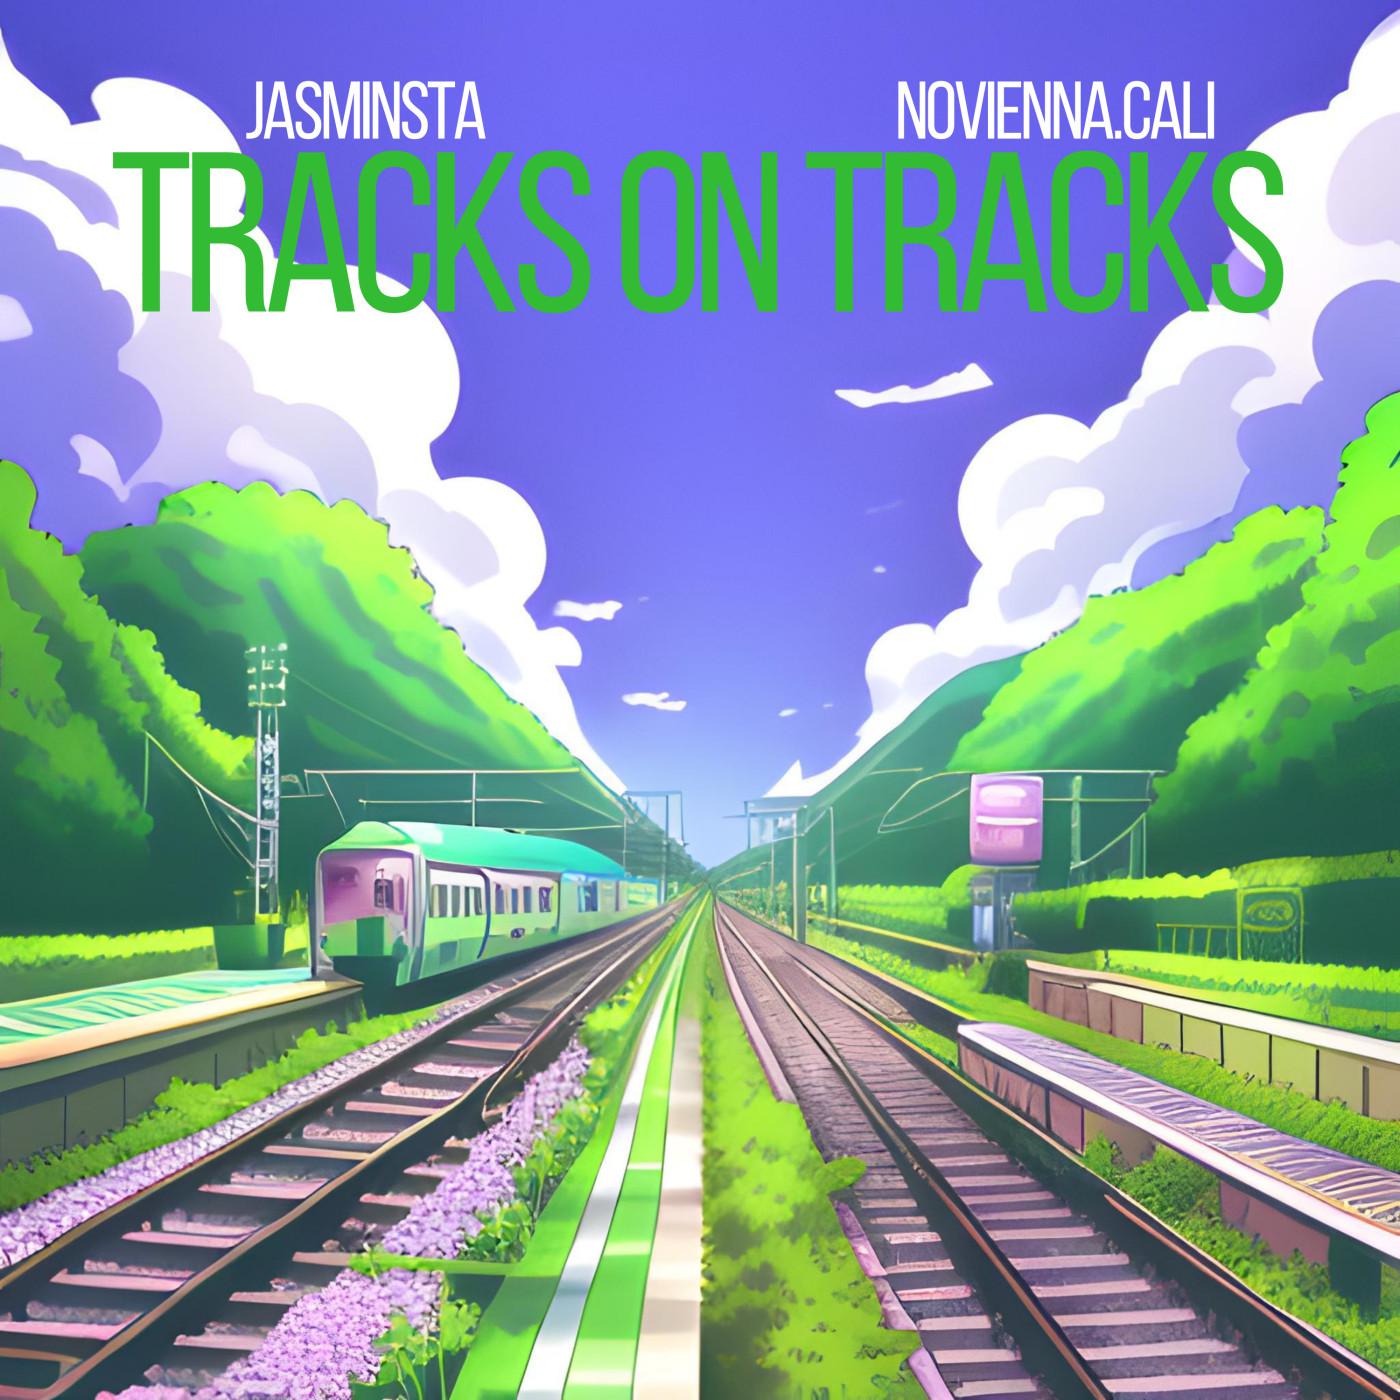 jasminsta - tracks on tracks (feat. novienna.cali)